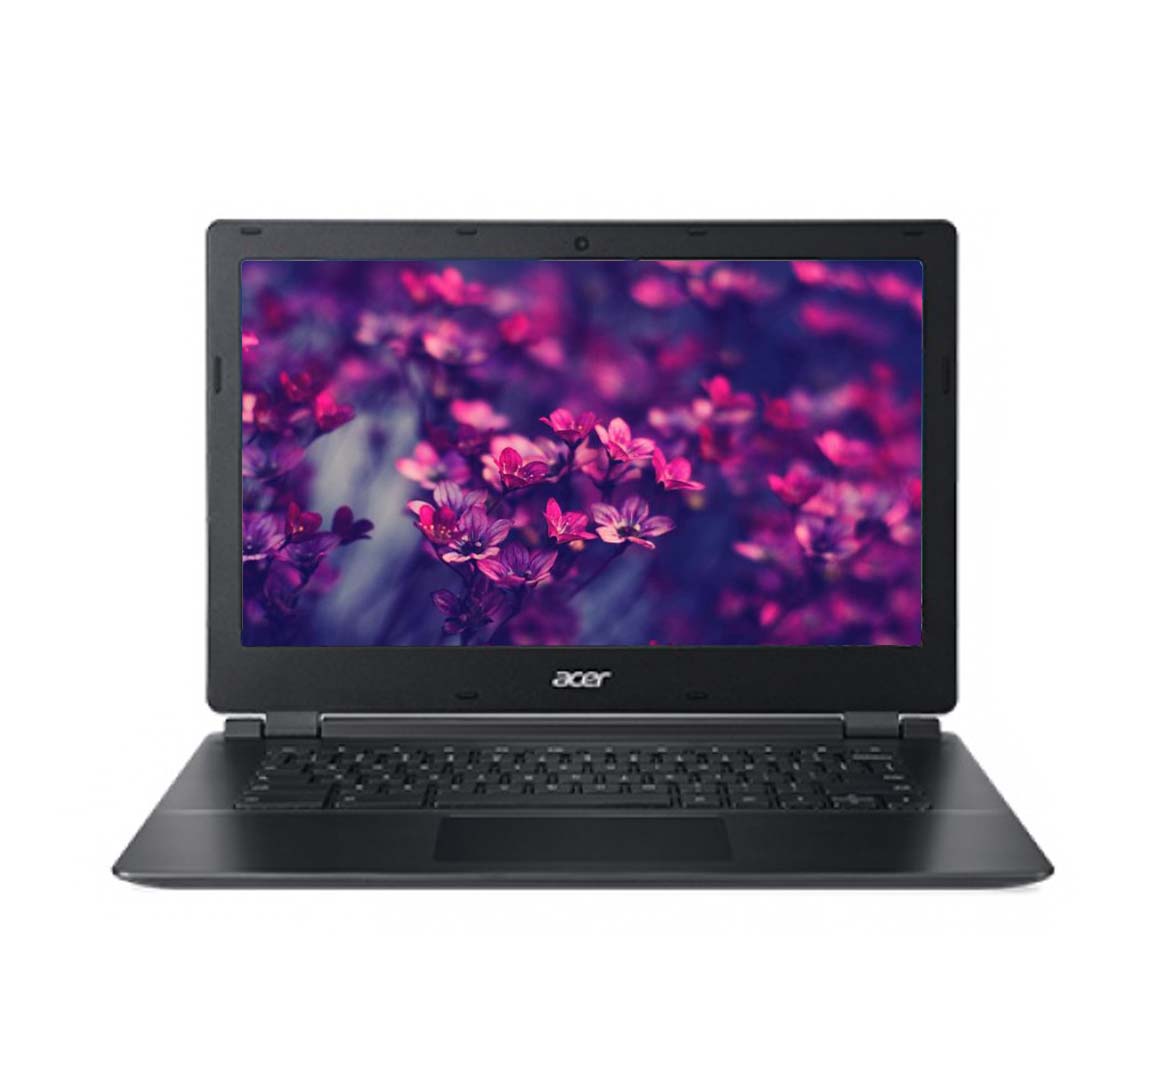 Acer Chromebook 13 Business Laptop, Intel Celeron N Series CPU, 2GB RAM, 16GB HDD, 13.3 inch Display, Windows 10 Pro, Refurbished Laptop